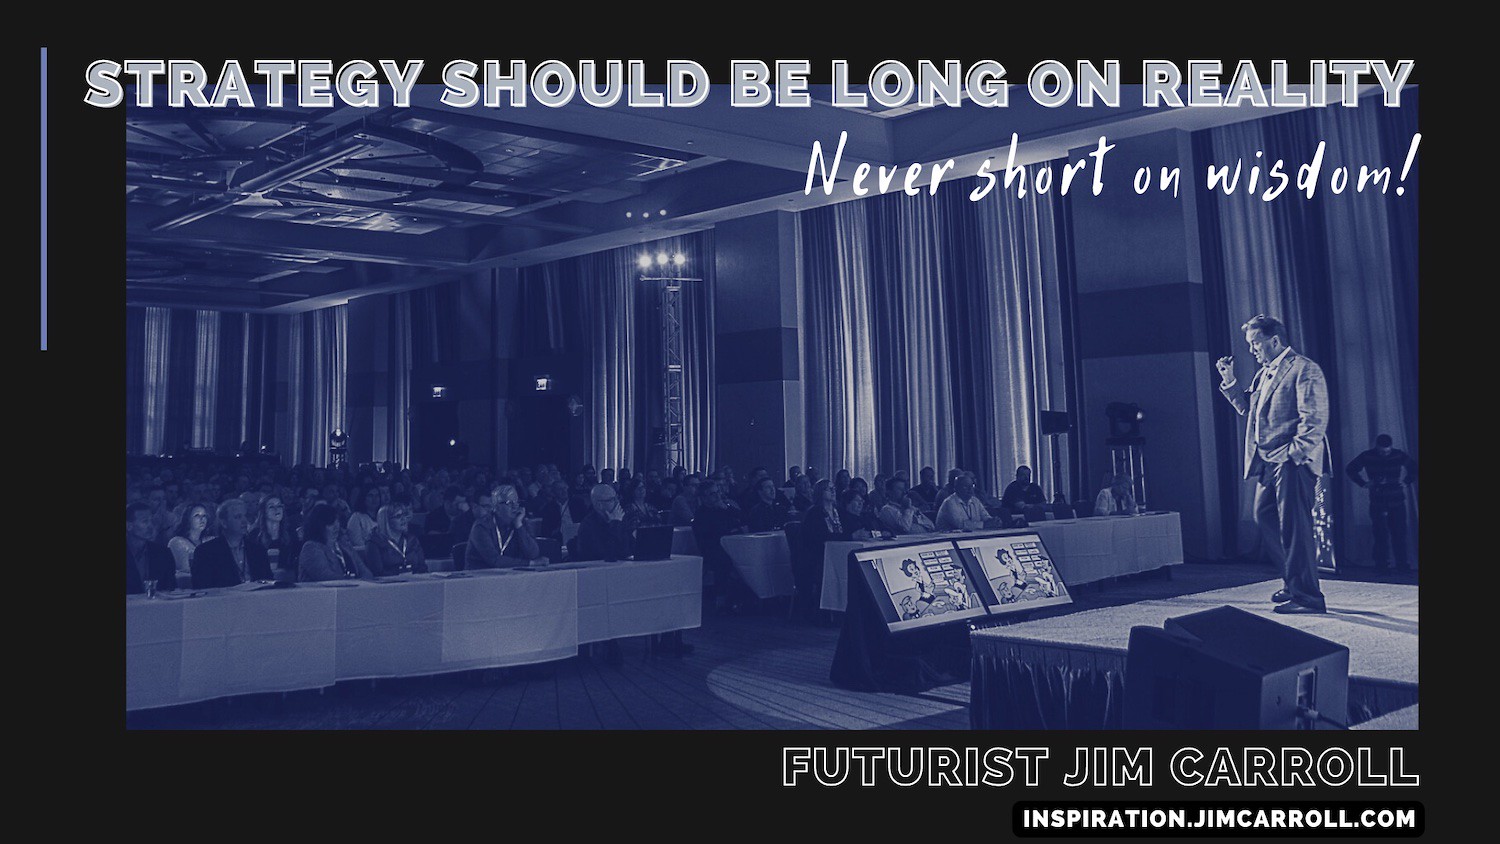 "Strategy should be long on reality. Never short on wisdom!" - Futurist Jim Carroll